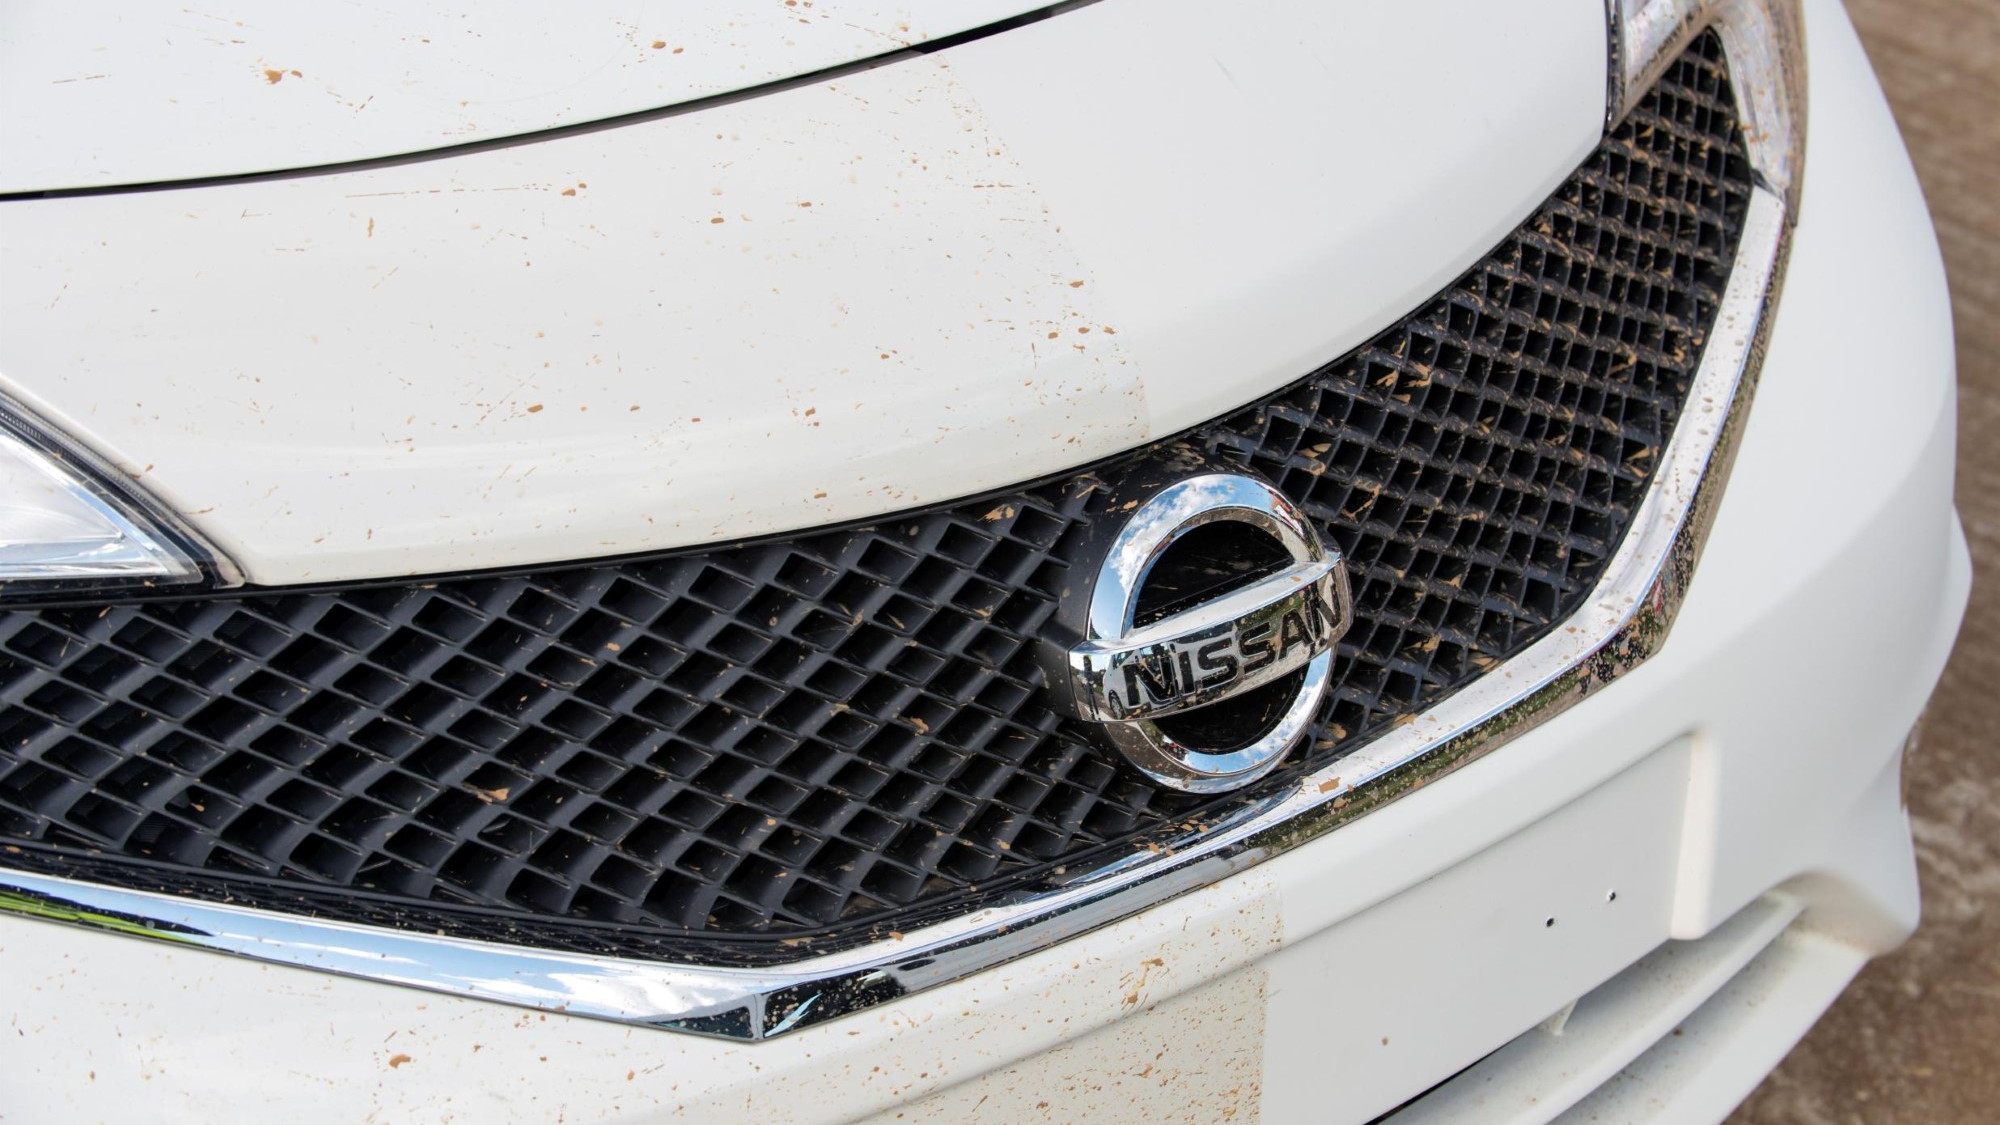 Nissan Versa Note "self-cleaning" prototype